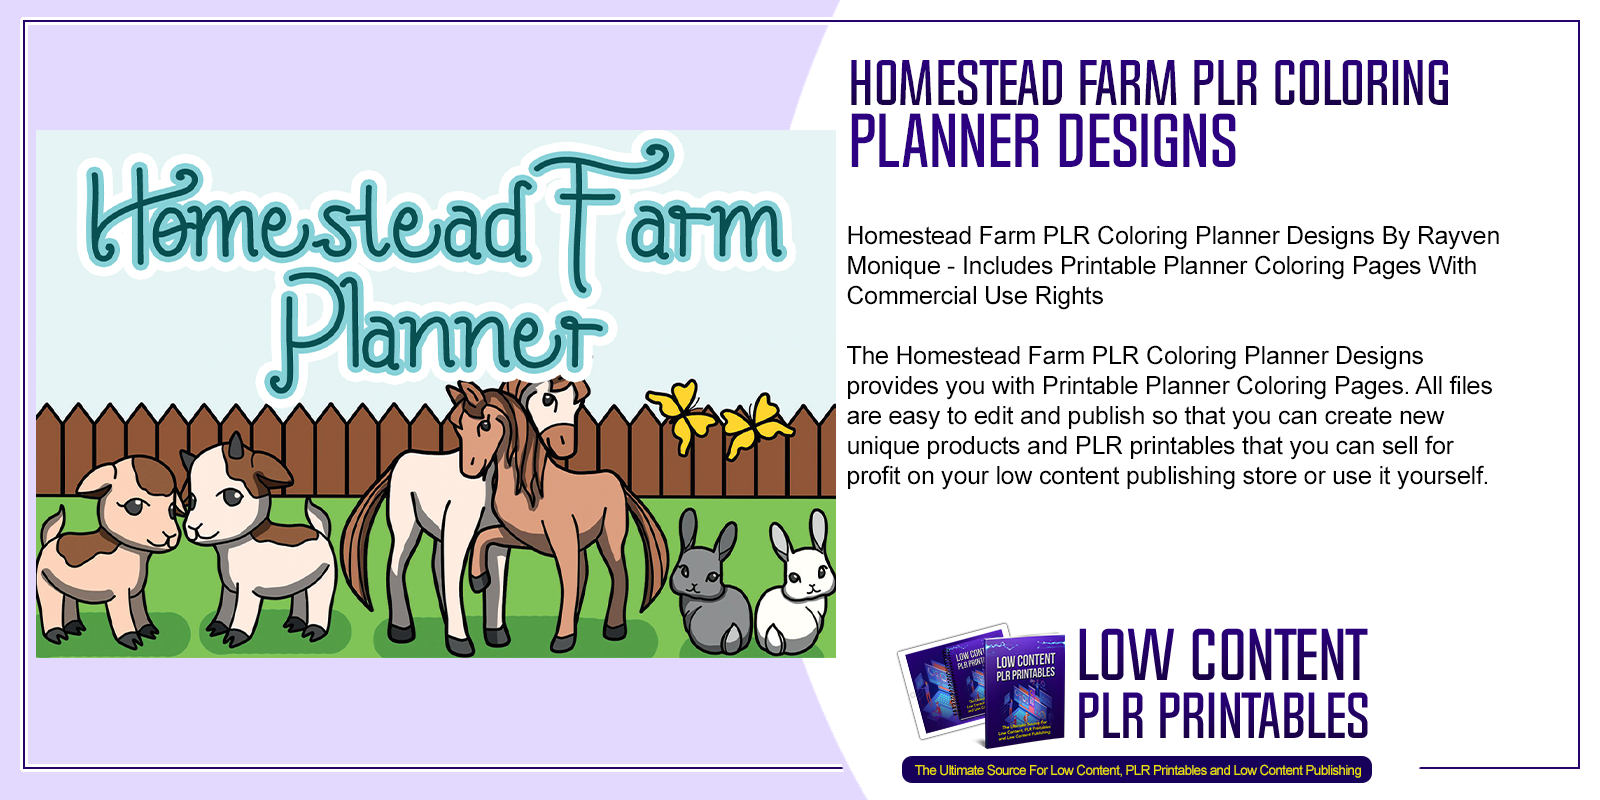 Homestead Farm PLR Coloring Planner Designs